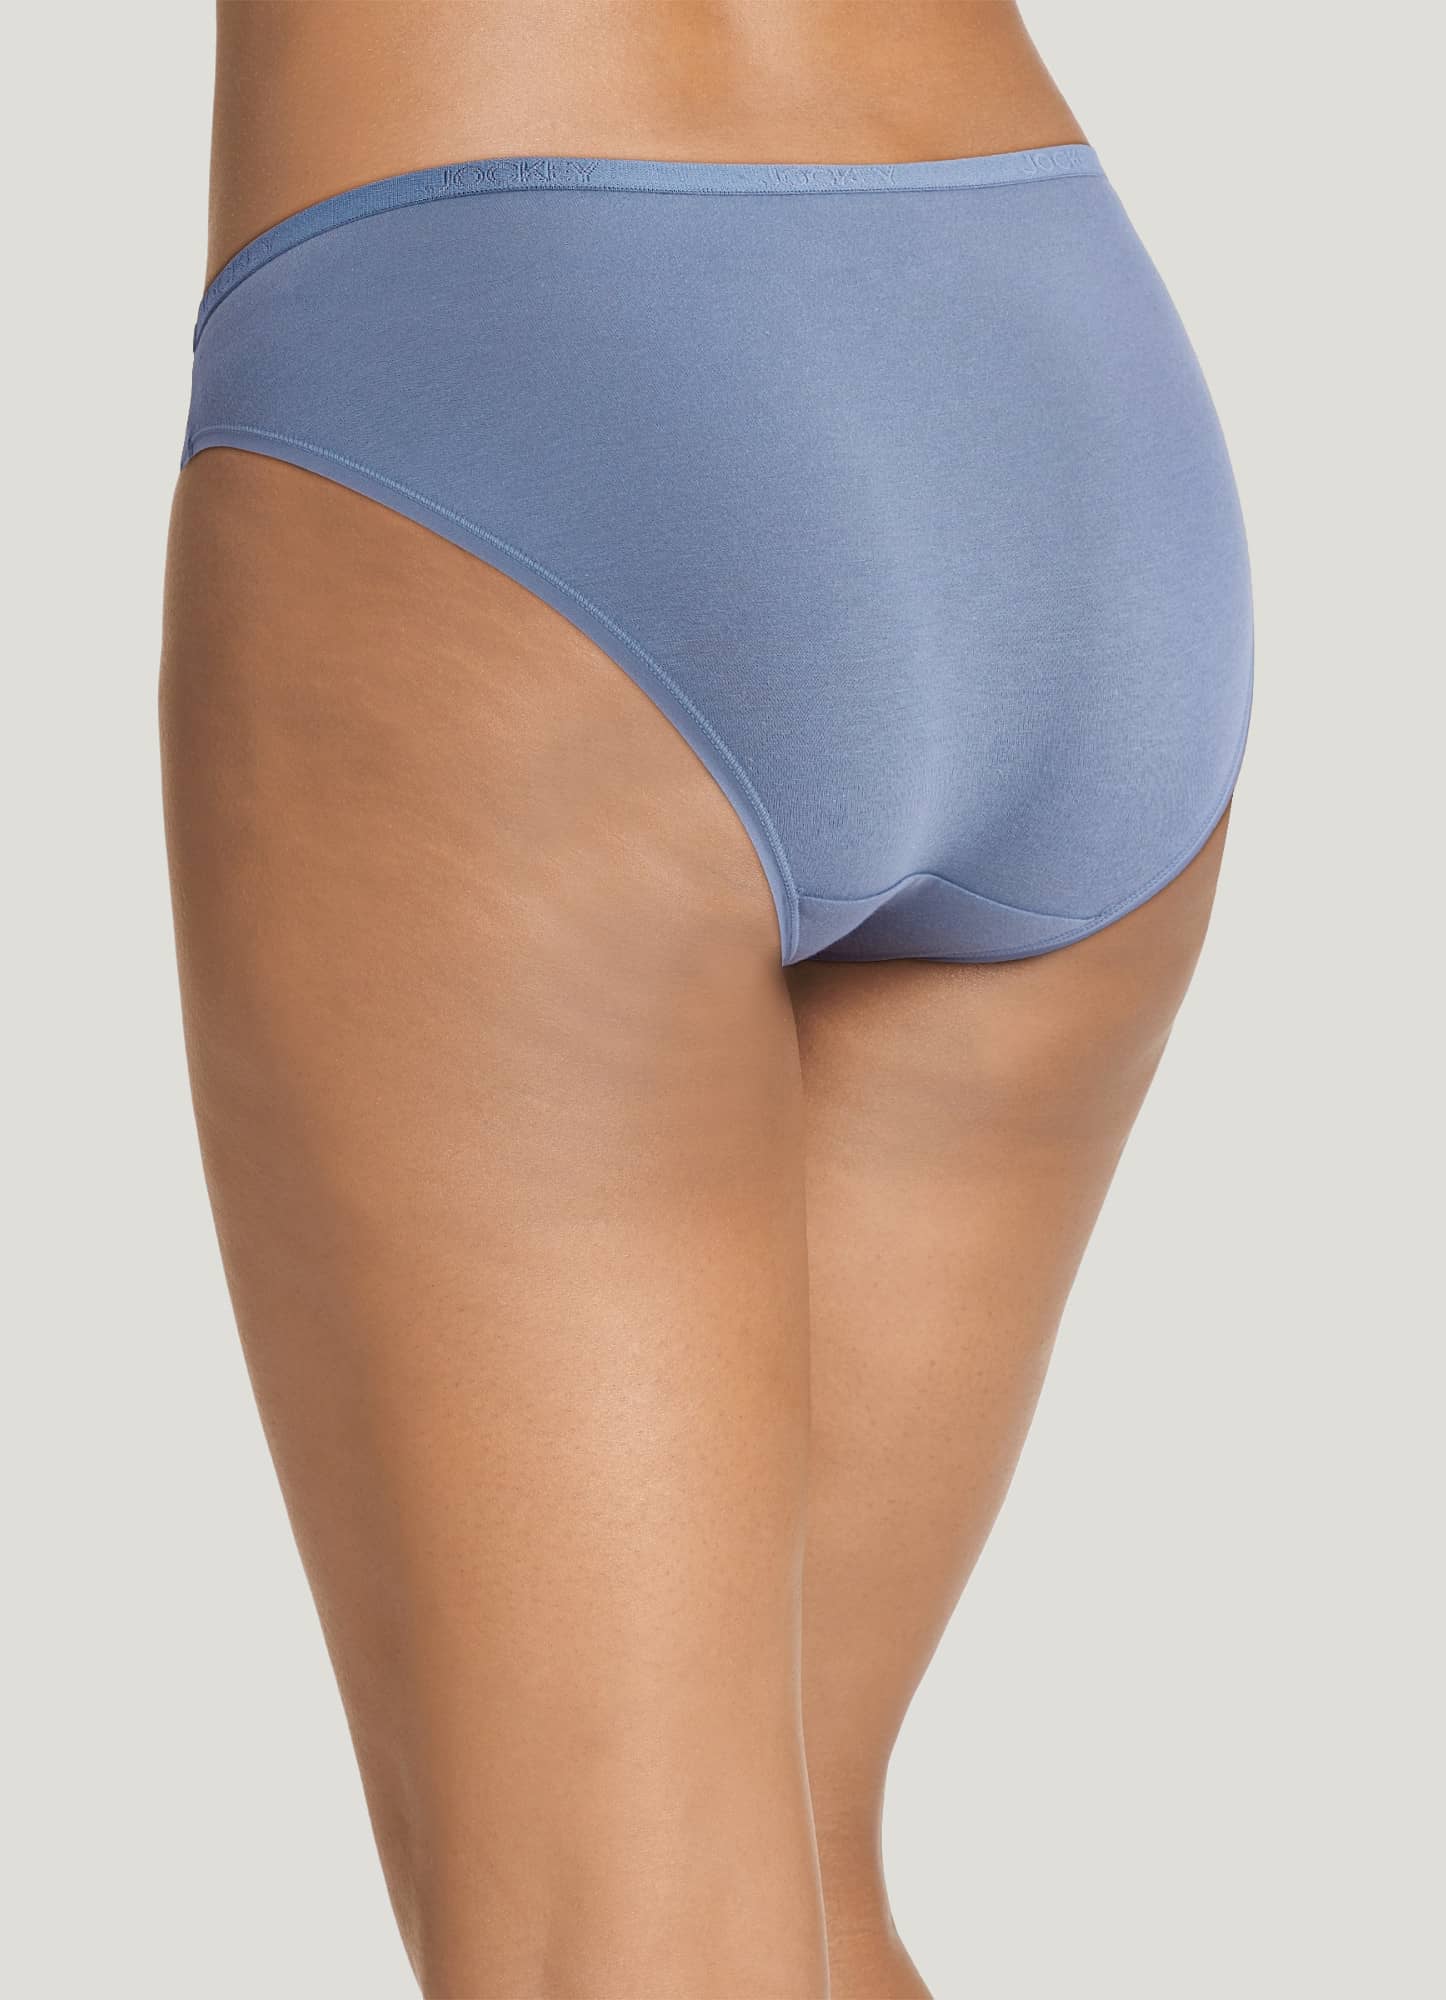 Jockey® Cotton Stretch Hipster Women's Underwear - Light Blue, 8 - Kroger